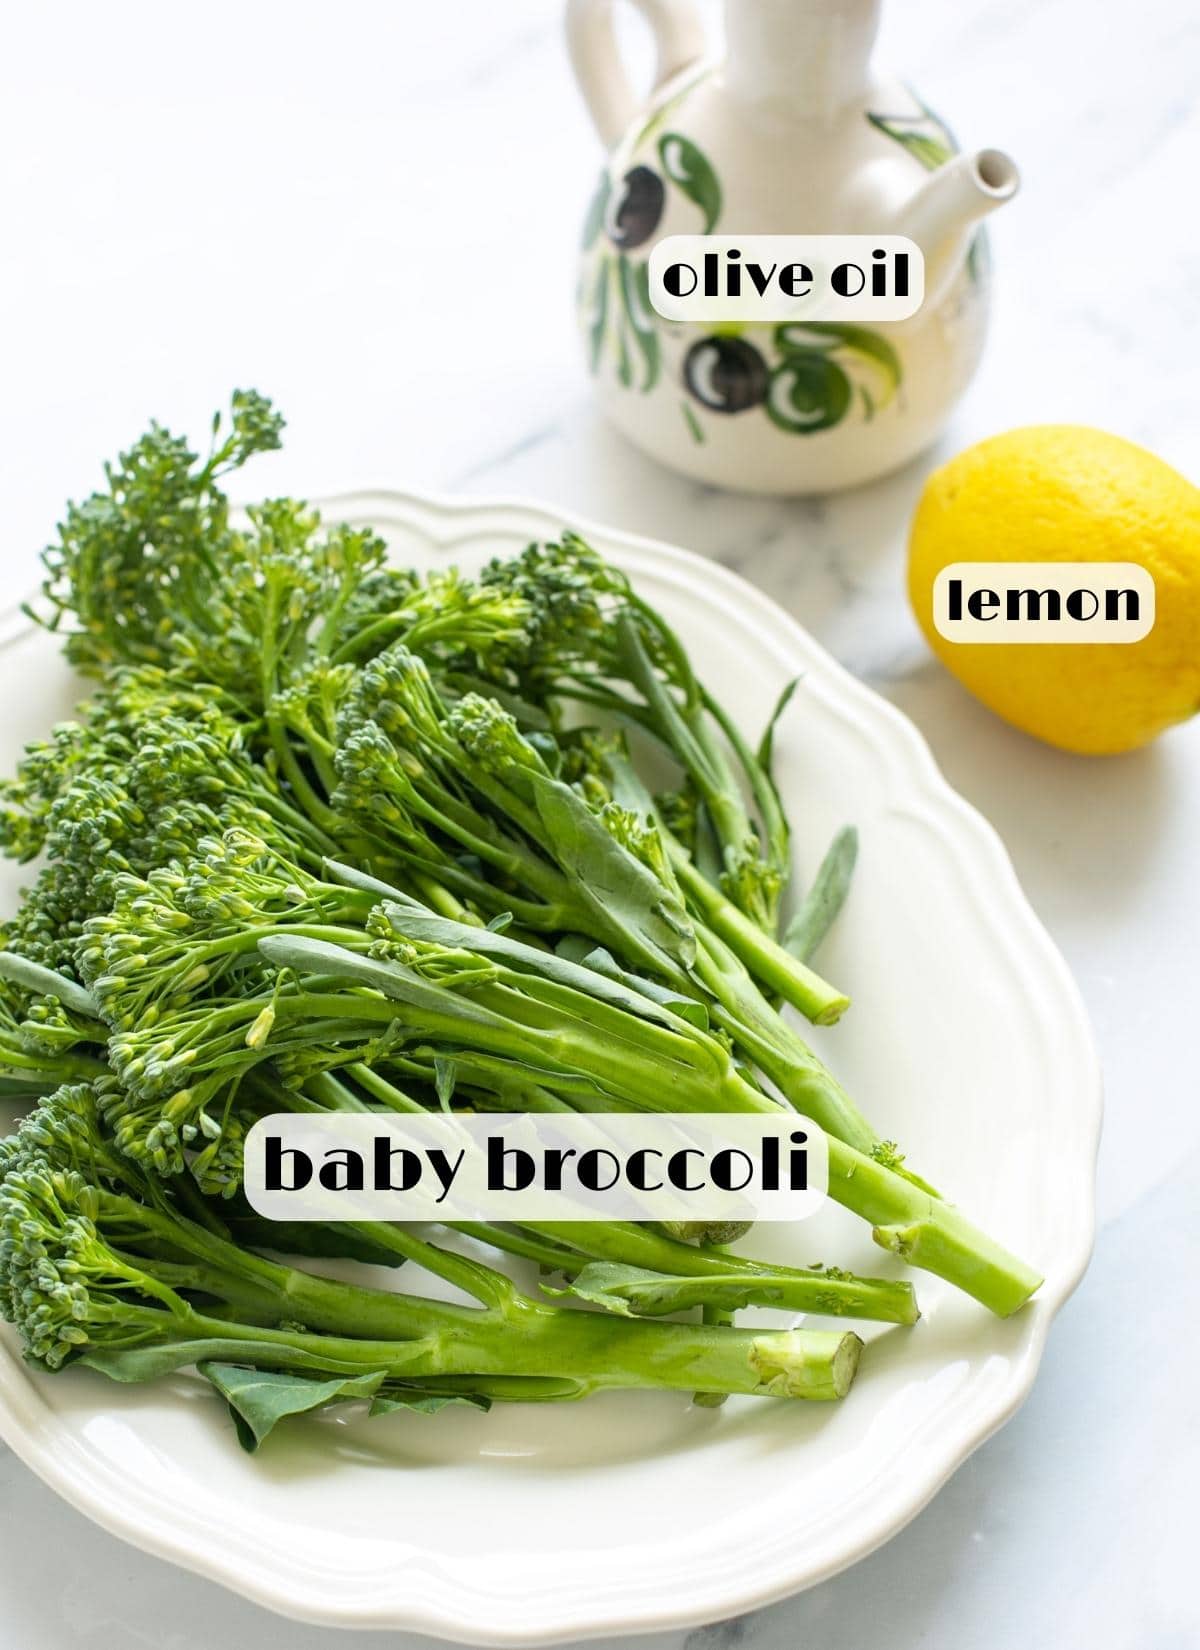 recipe ingredients: baby broccoli, lemon, olive oil.